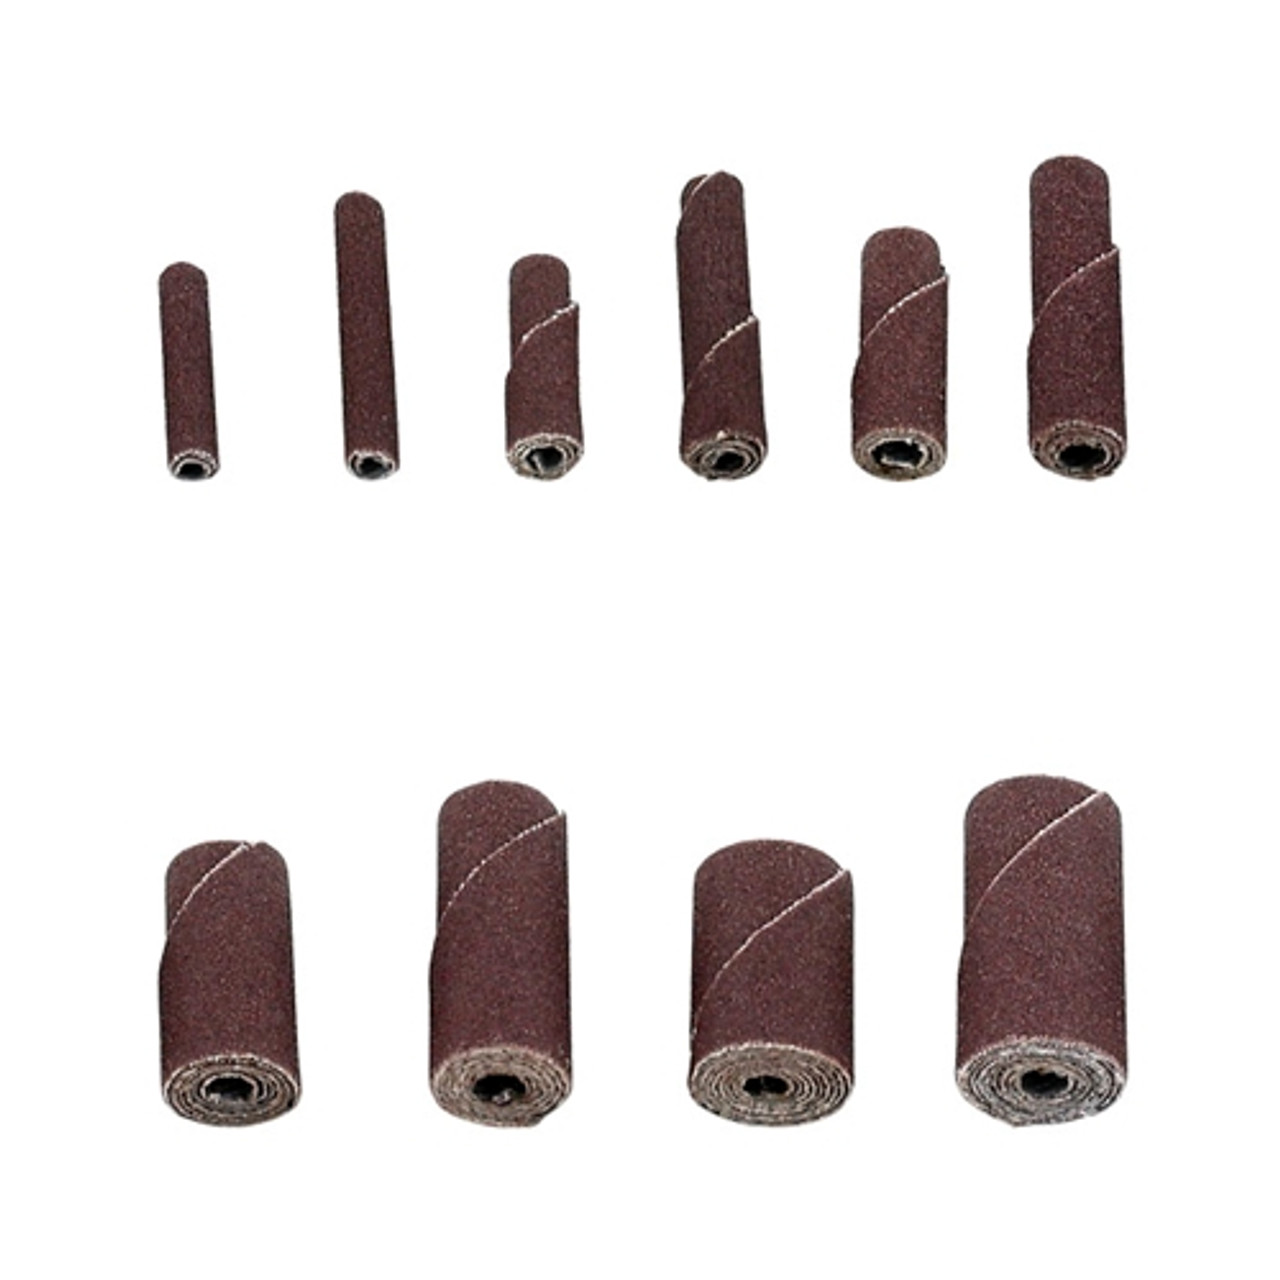 Abrasive Cartridge Rolls - 3/8" x 1" x 1/8", 120 Grit